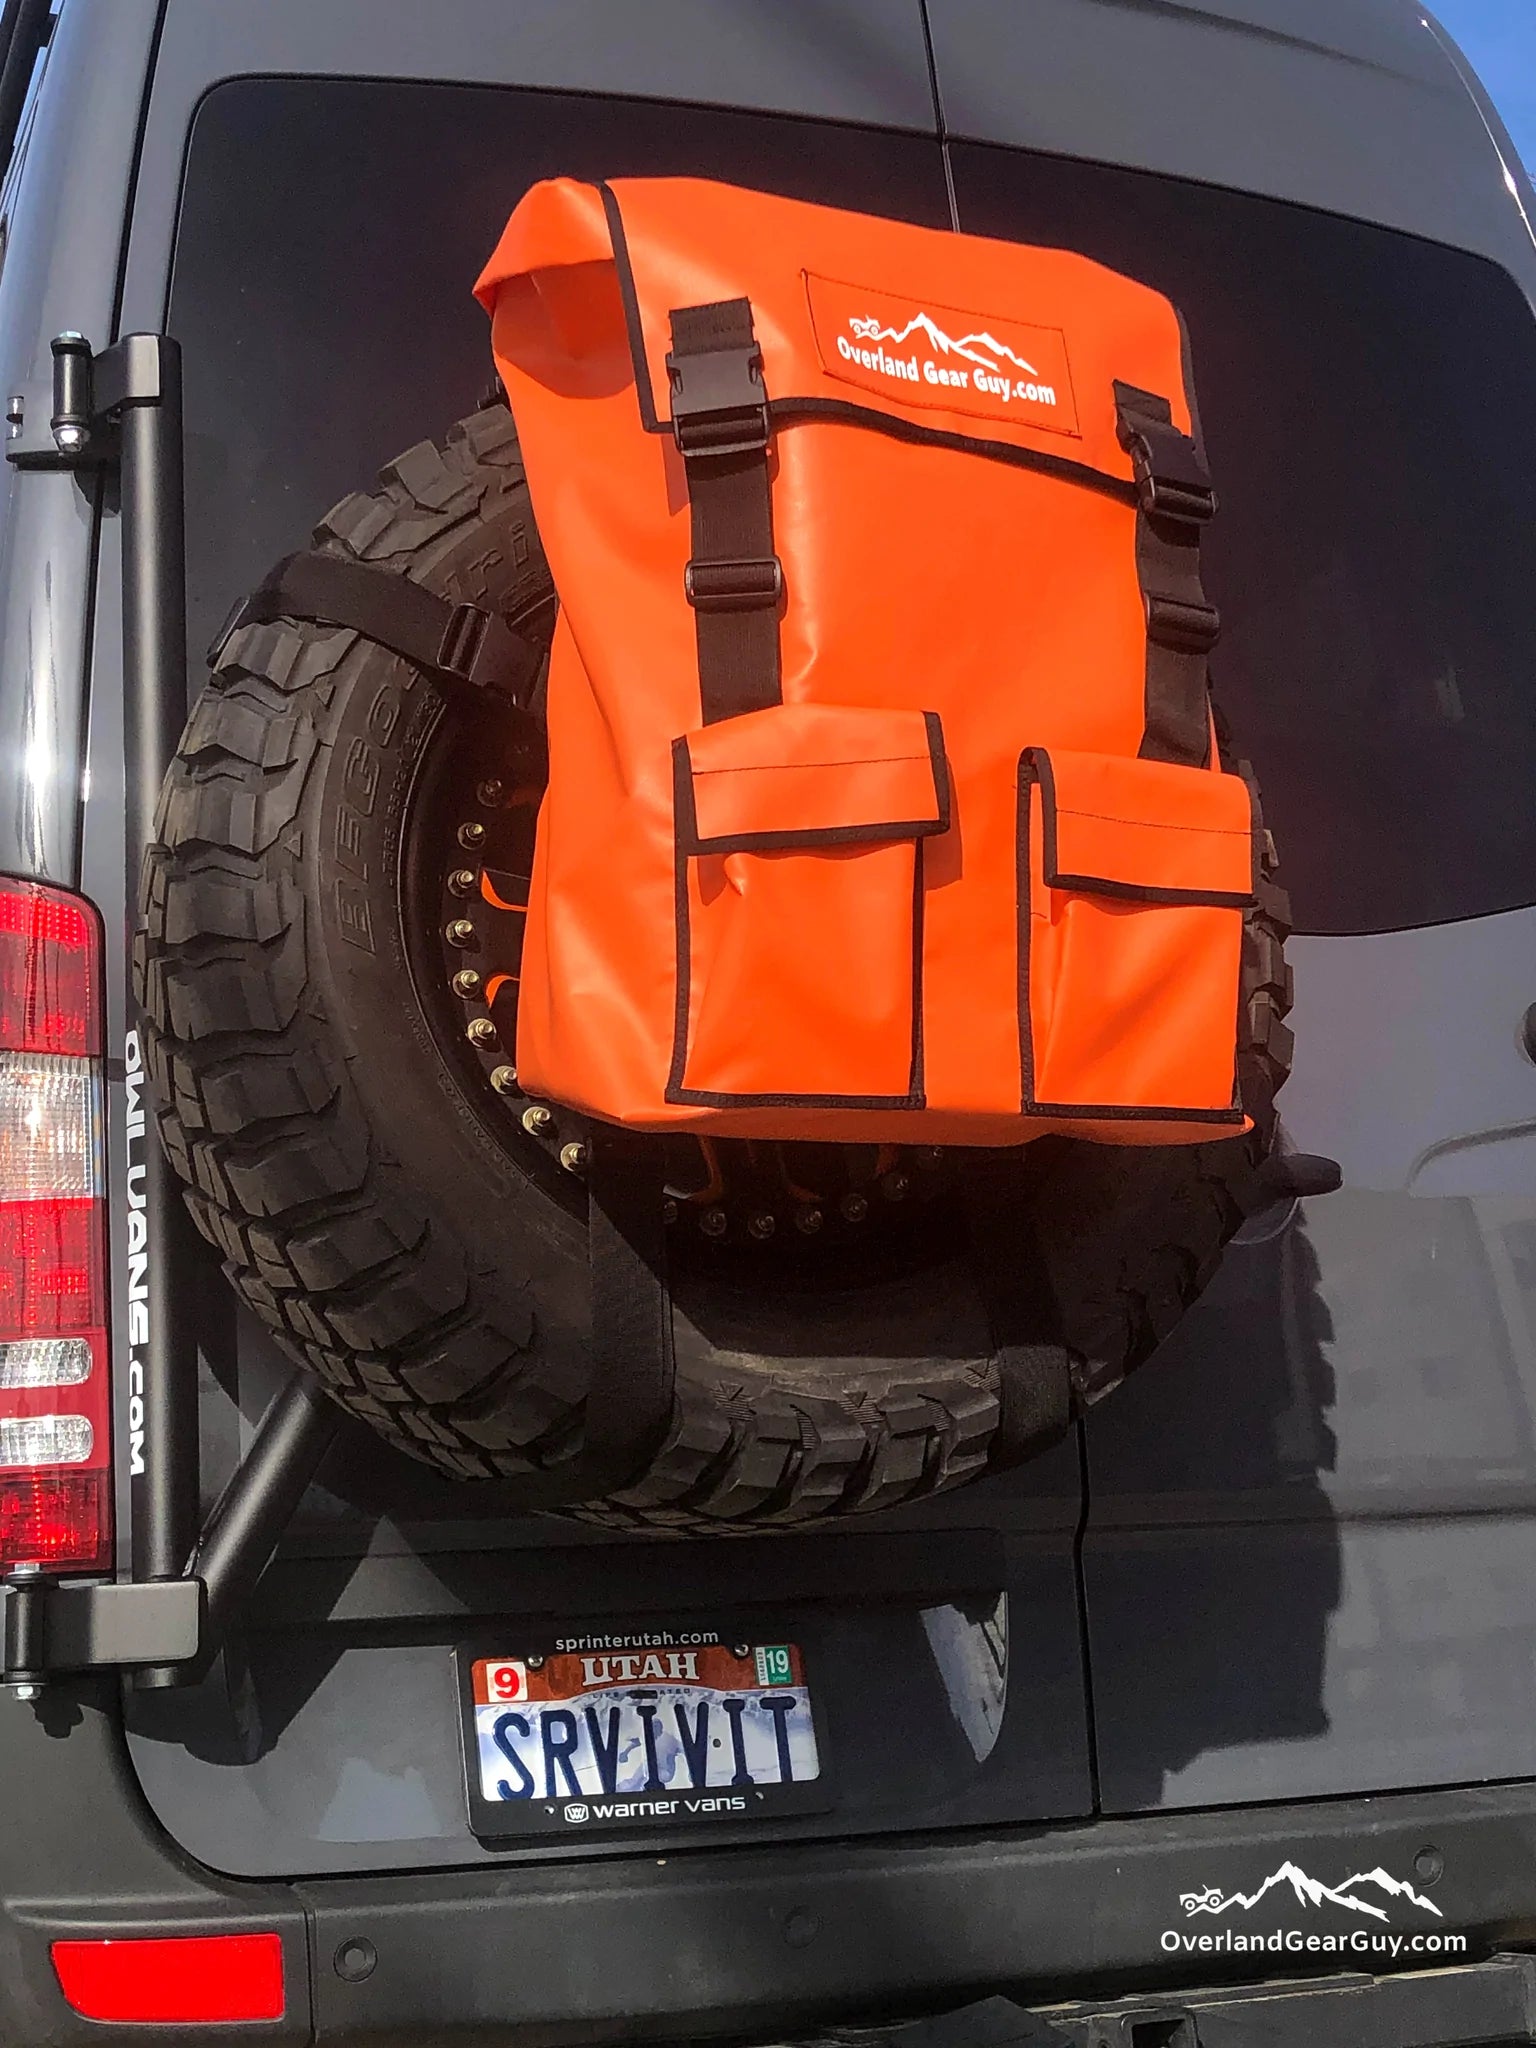 Overland Gear Guy Van - Spare Tire Trash Bag - Sprinter - Revel